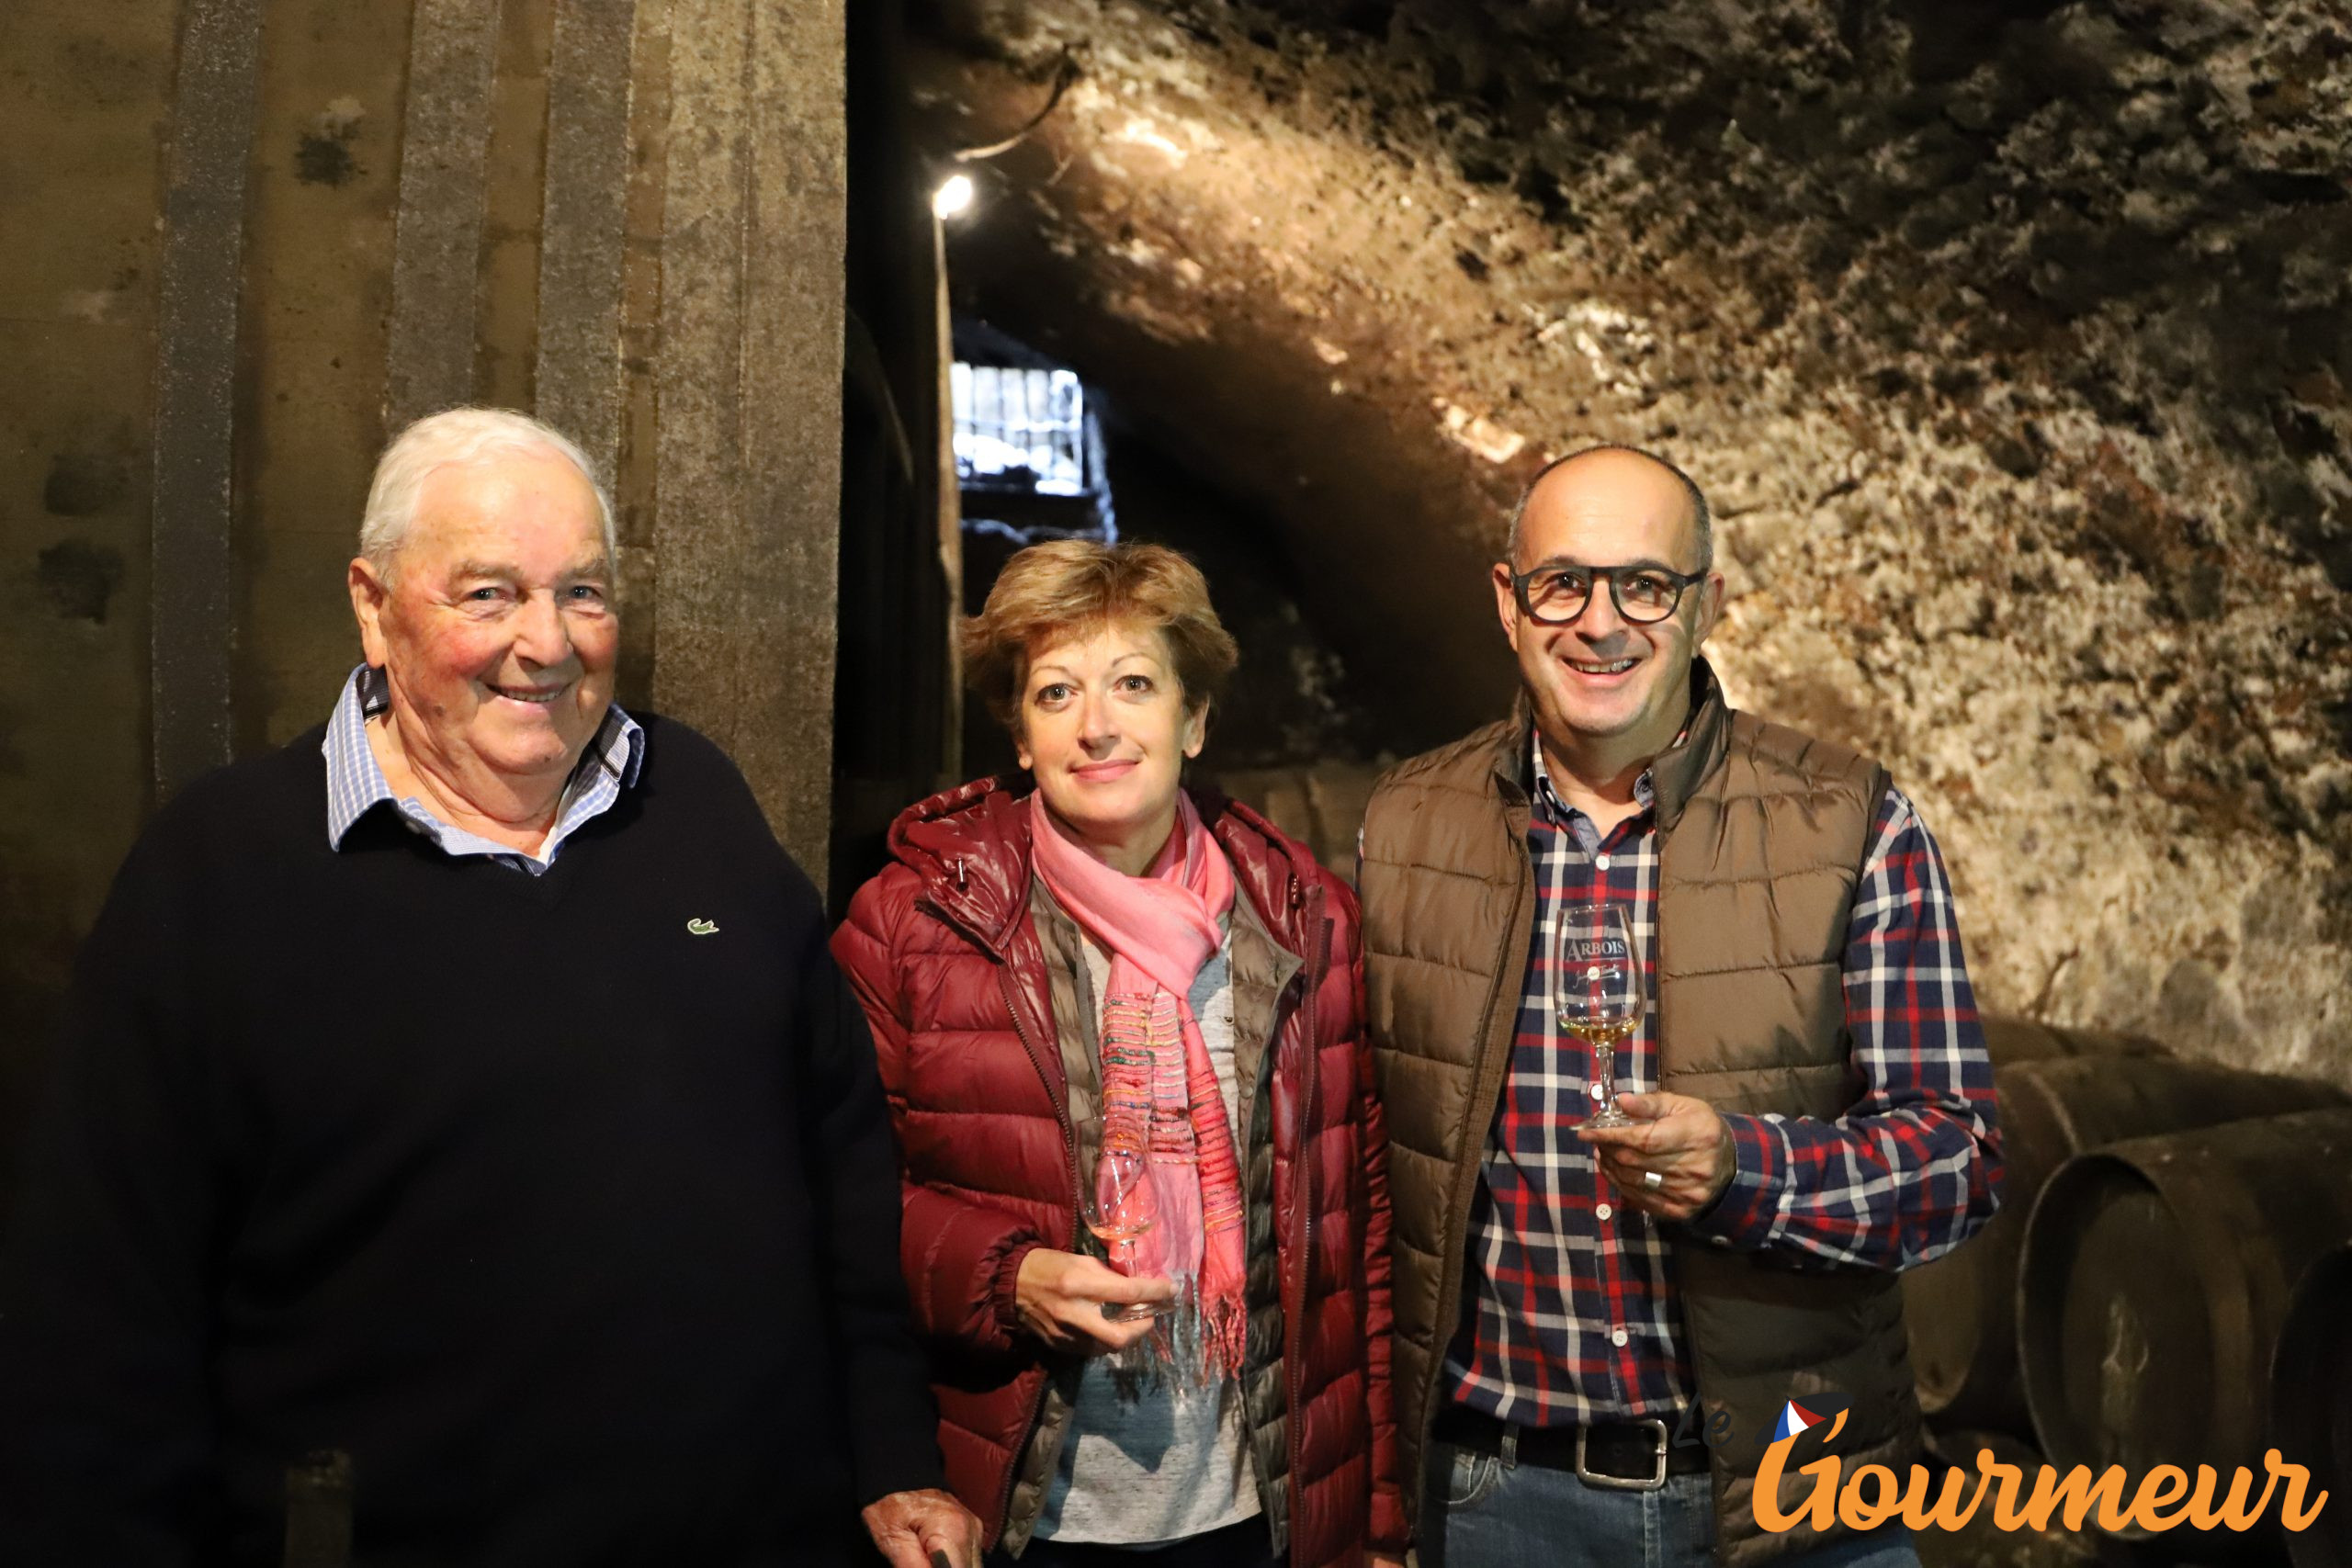 Jura cave viticulteur